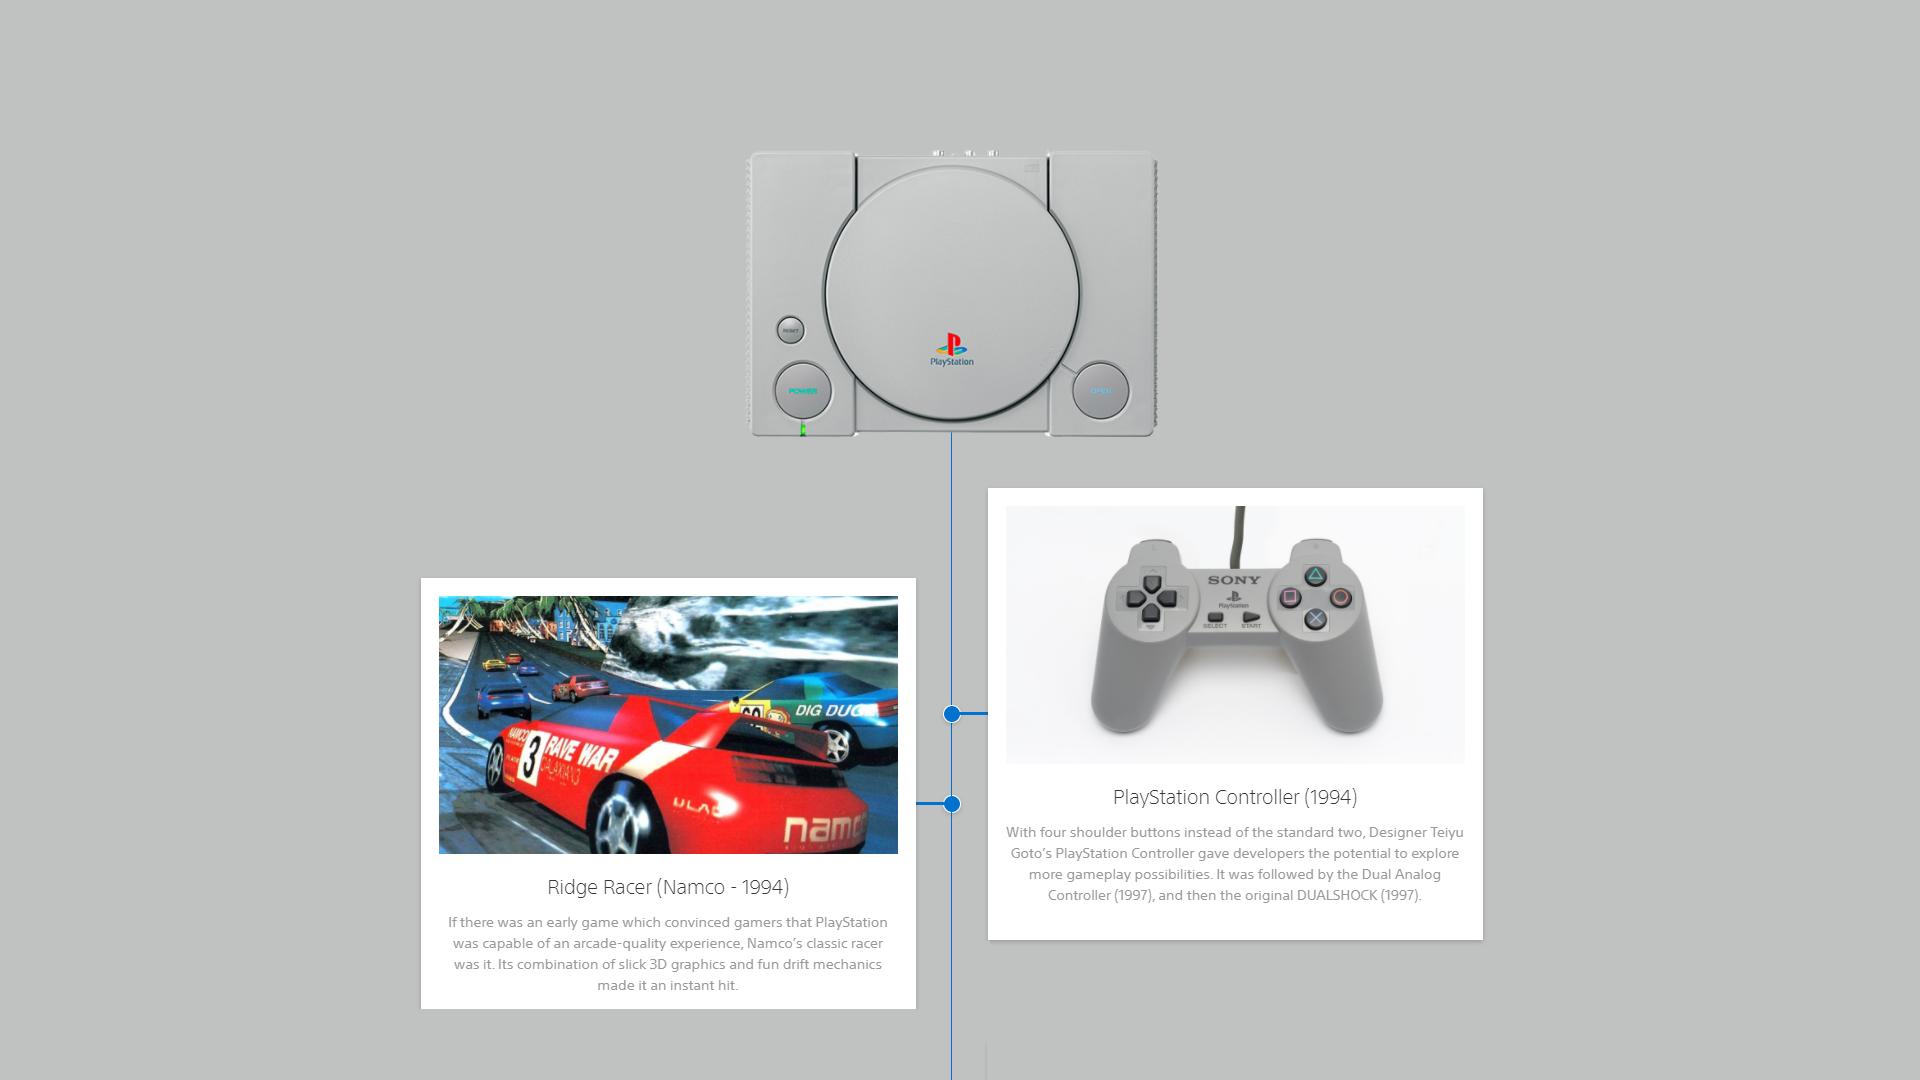 Tech Advent Calendar 2020 — Dec 3: Sony PlayStation Officially Available in Japan